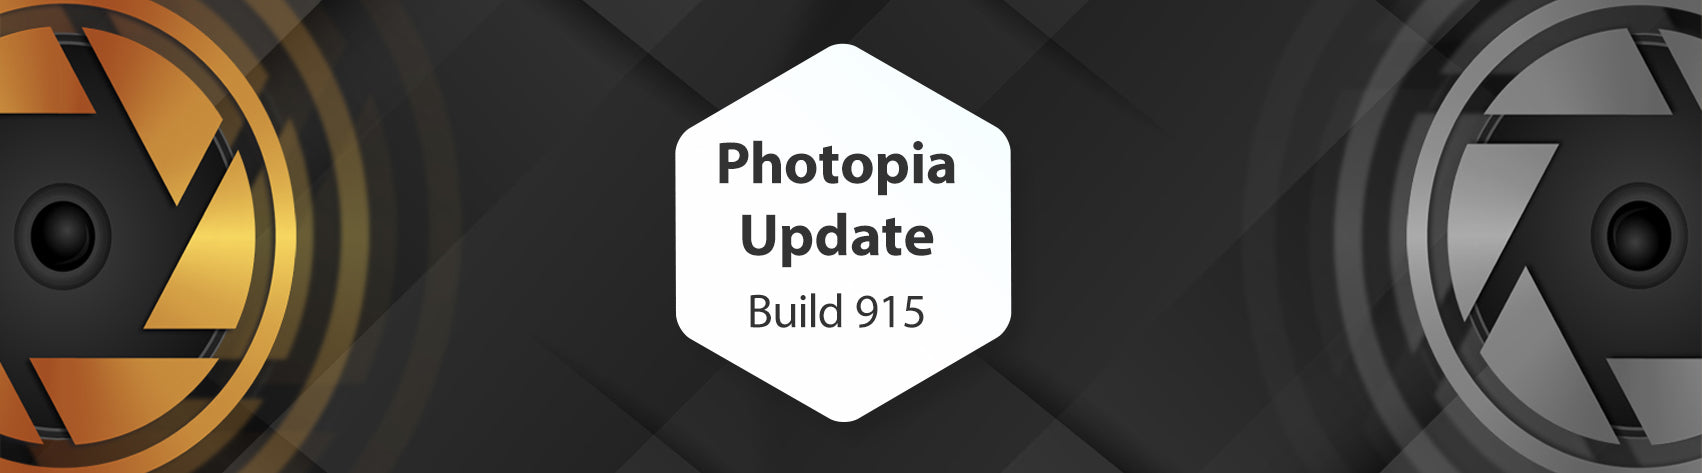 Photopia Update - Build 915